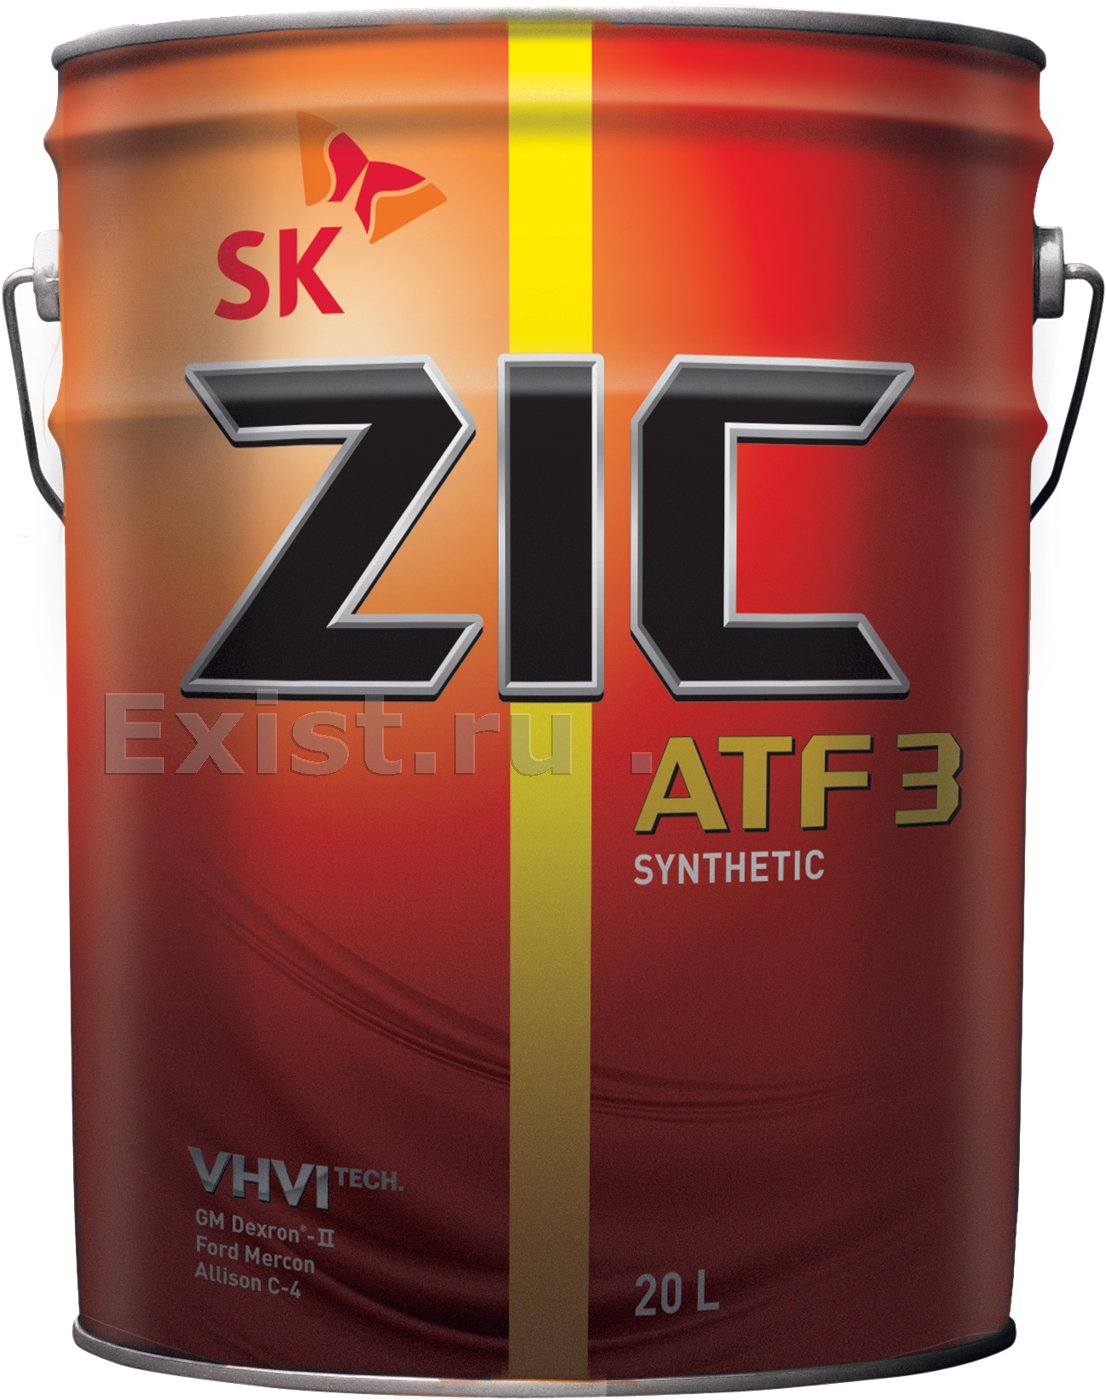 Масло Zic ATF 3 масло АКПП синтетика, 20 л.